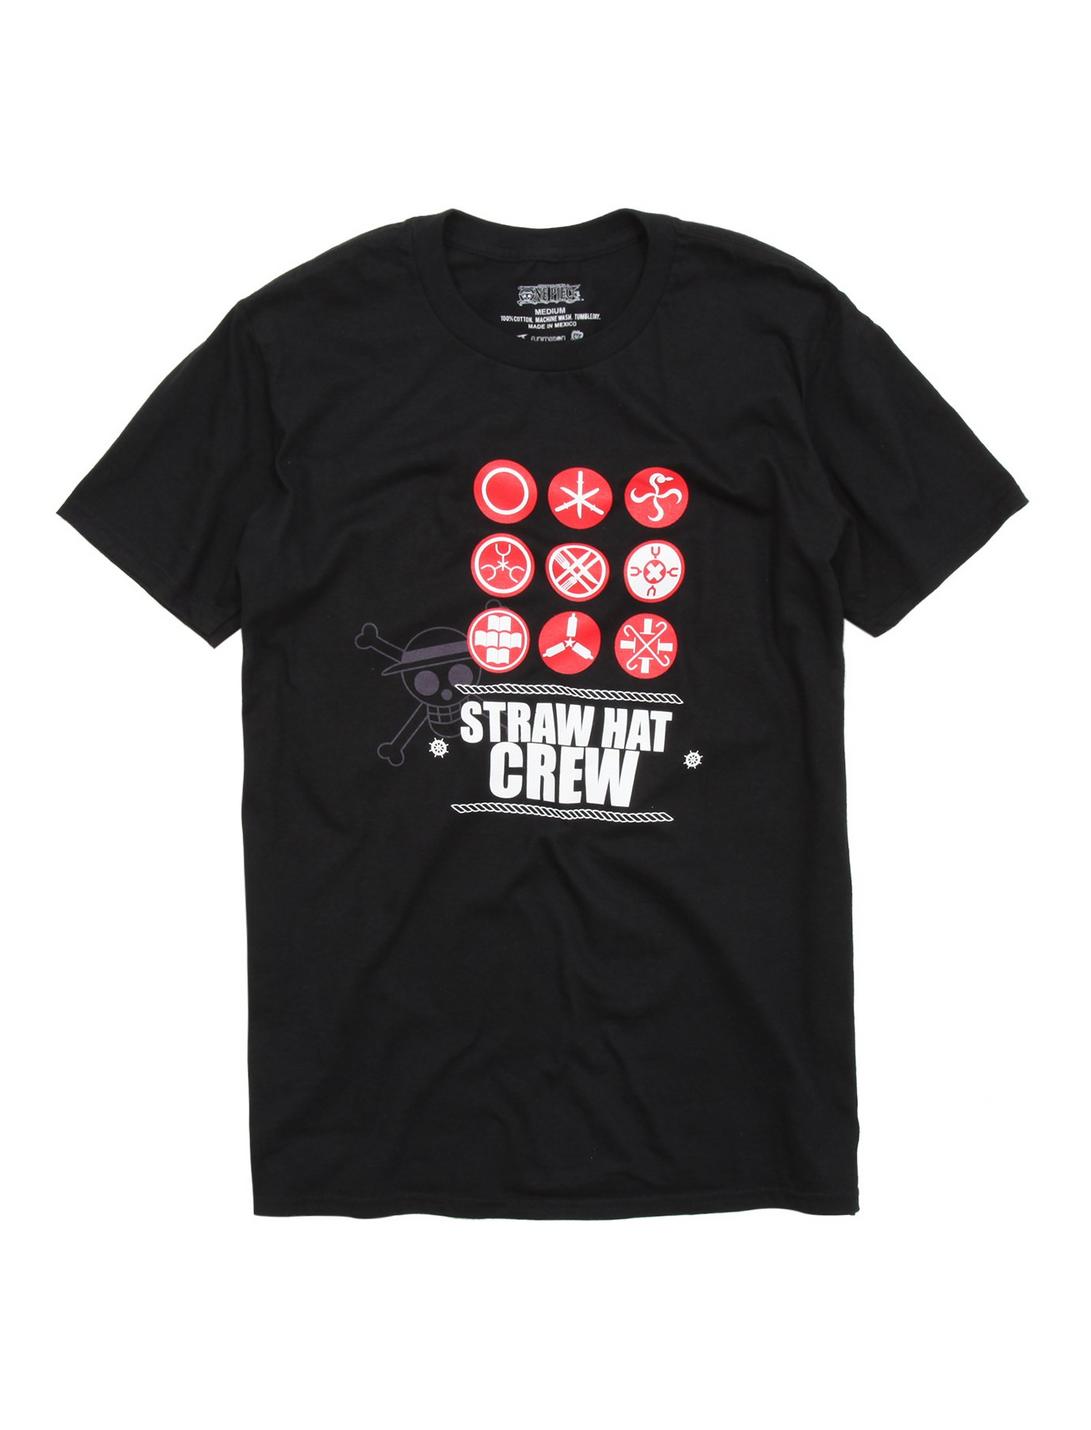 One Piece Straw Hat Crew T-Shirt, BLACK, hi-res